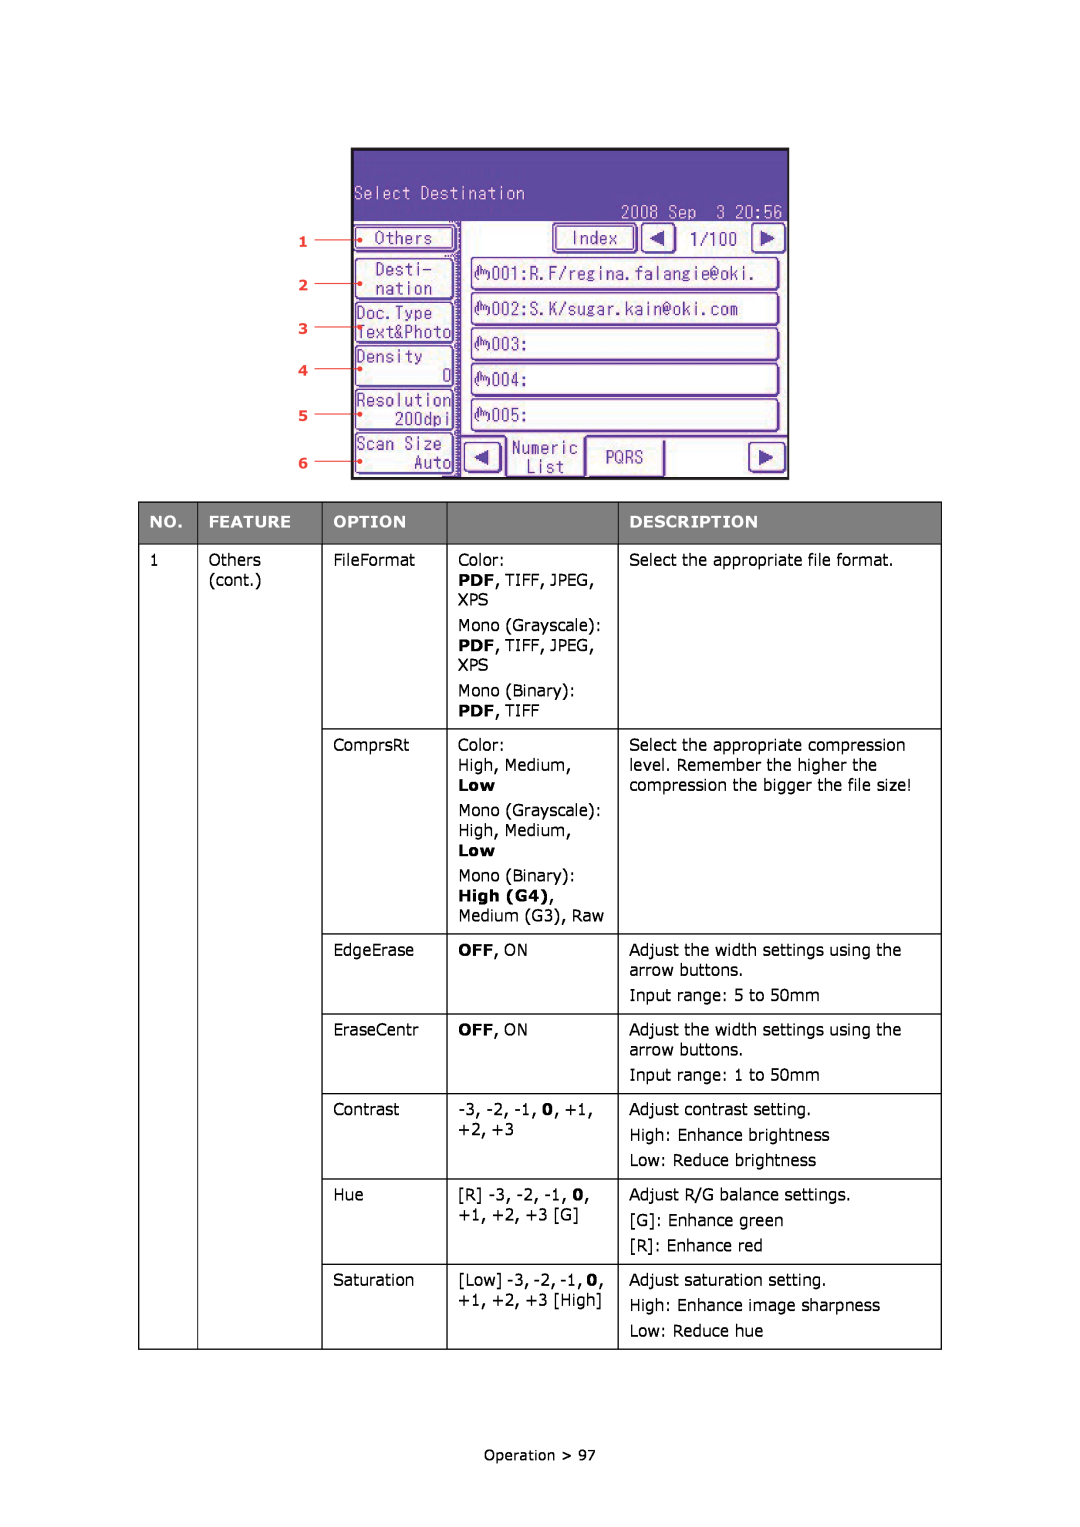 Oki MC860n MFP manual Feature, Option, Description, High G4 